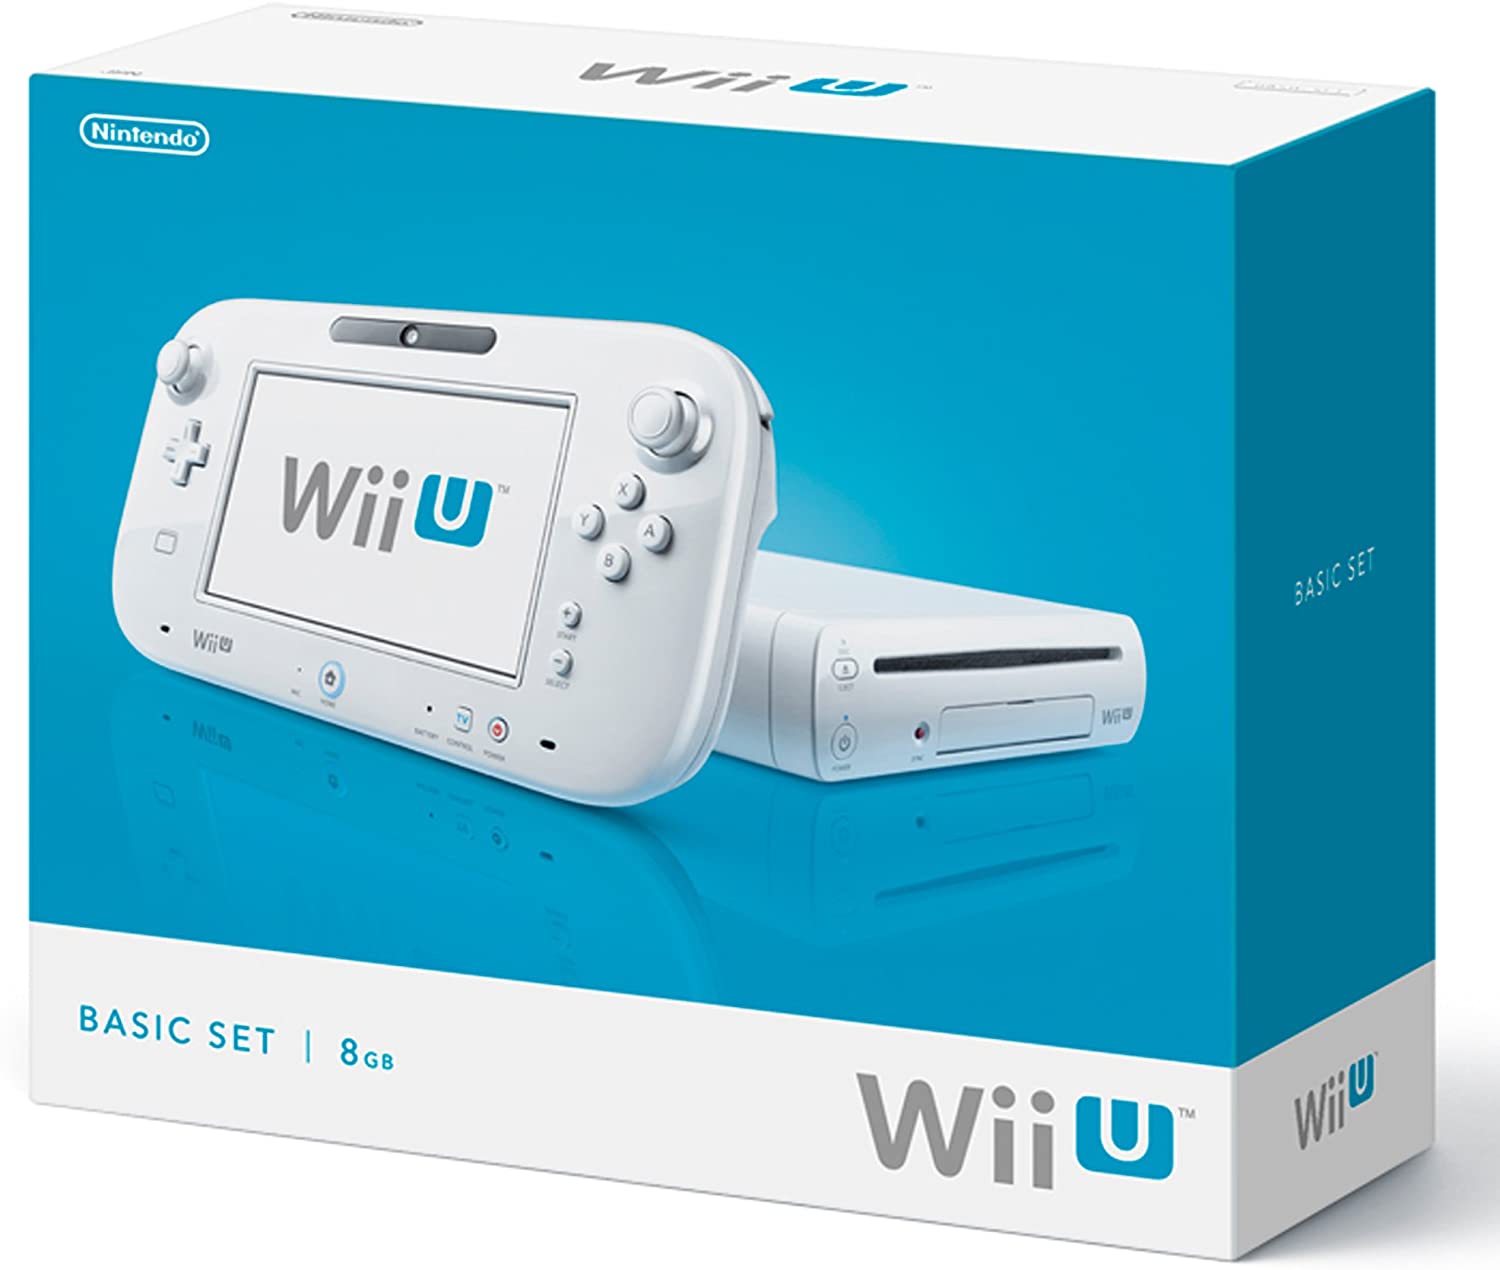 Wii U ベーシックセット